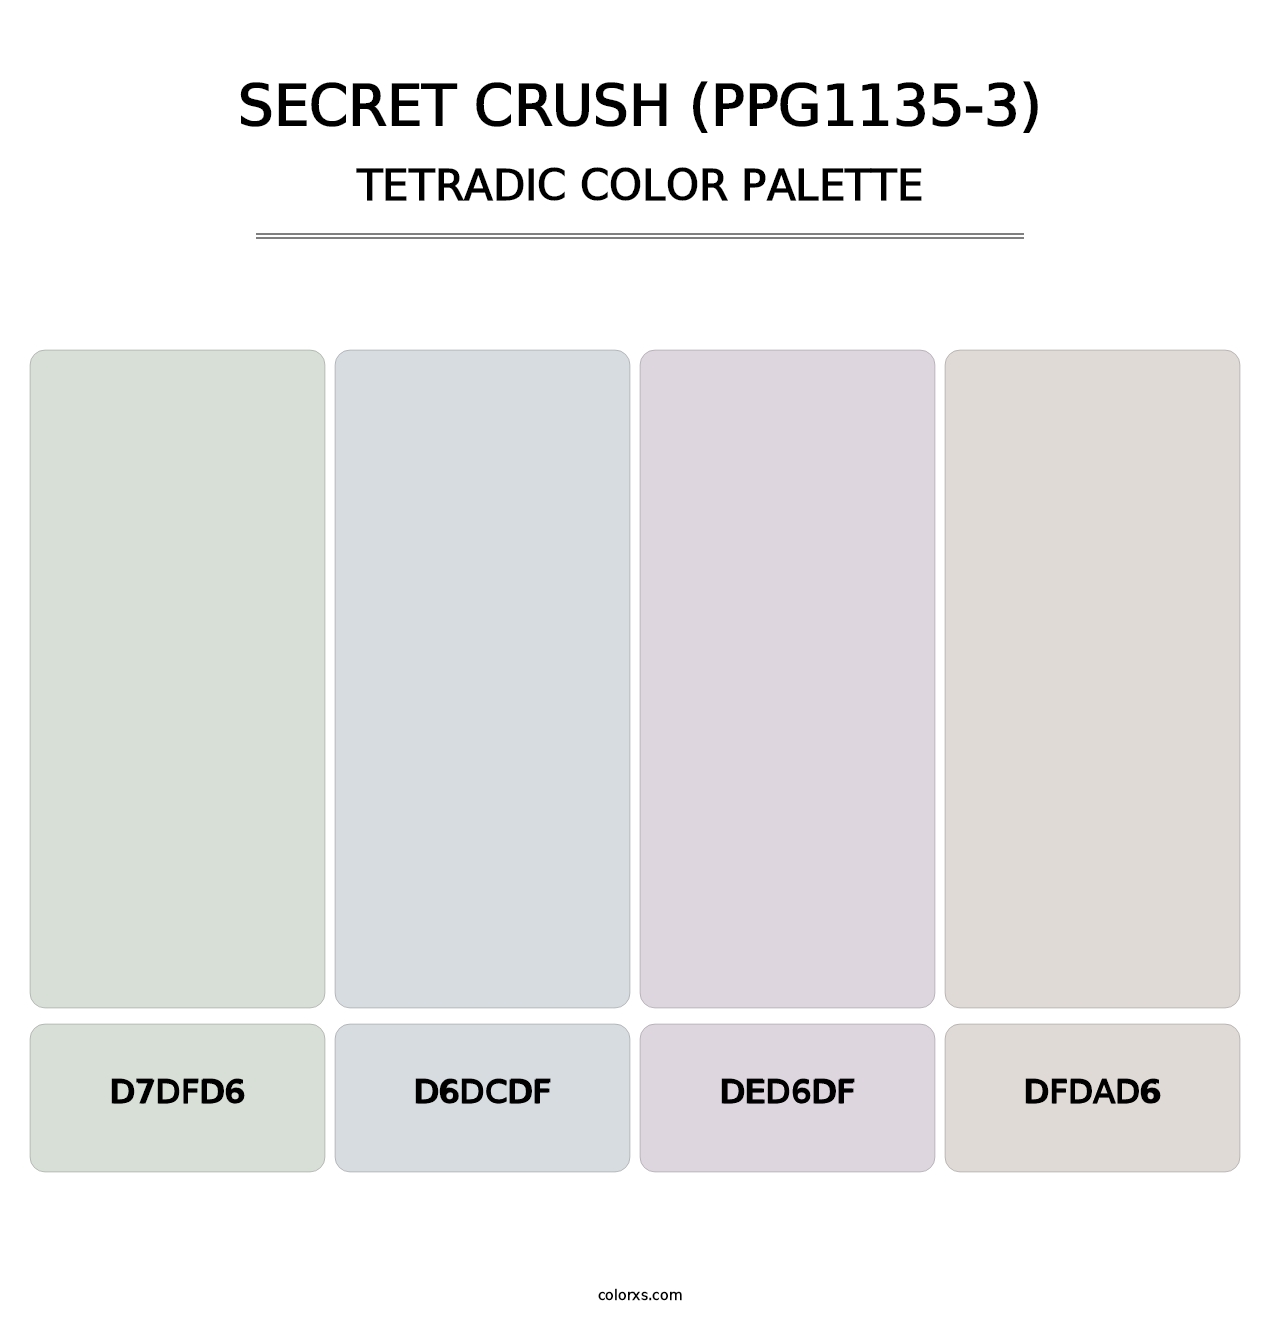 Secret Crush (PPG1135-3) - Tetradic Color Palette